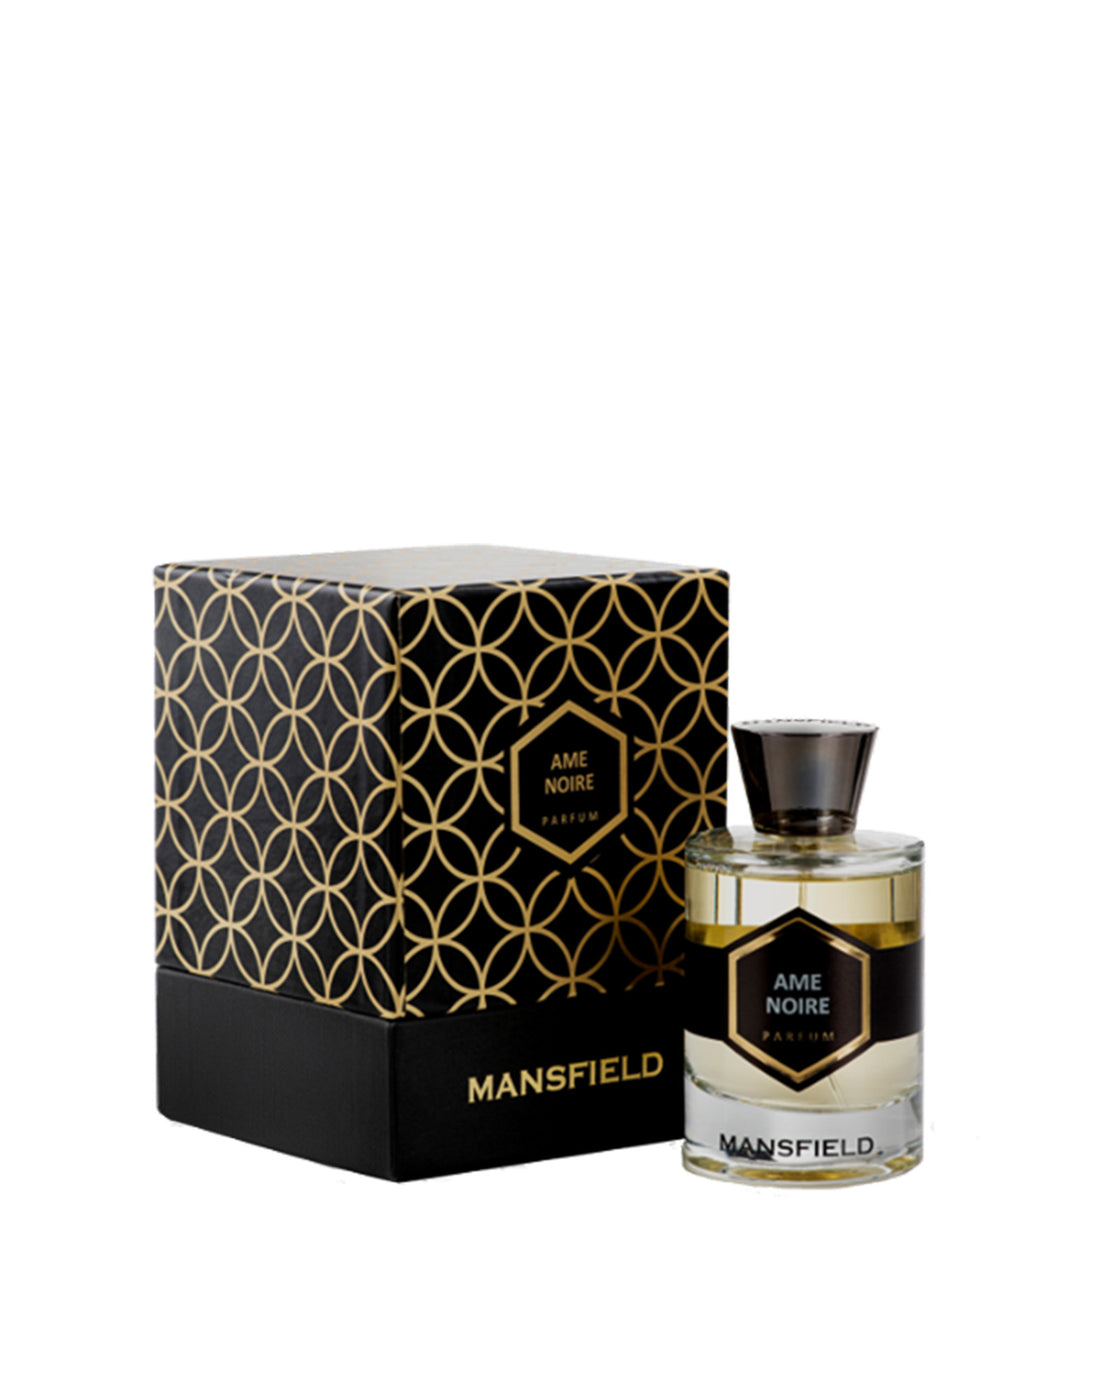 MANSFIELD Ame Noire Gold Parfum 100 ml